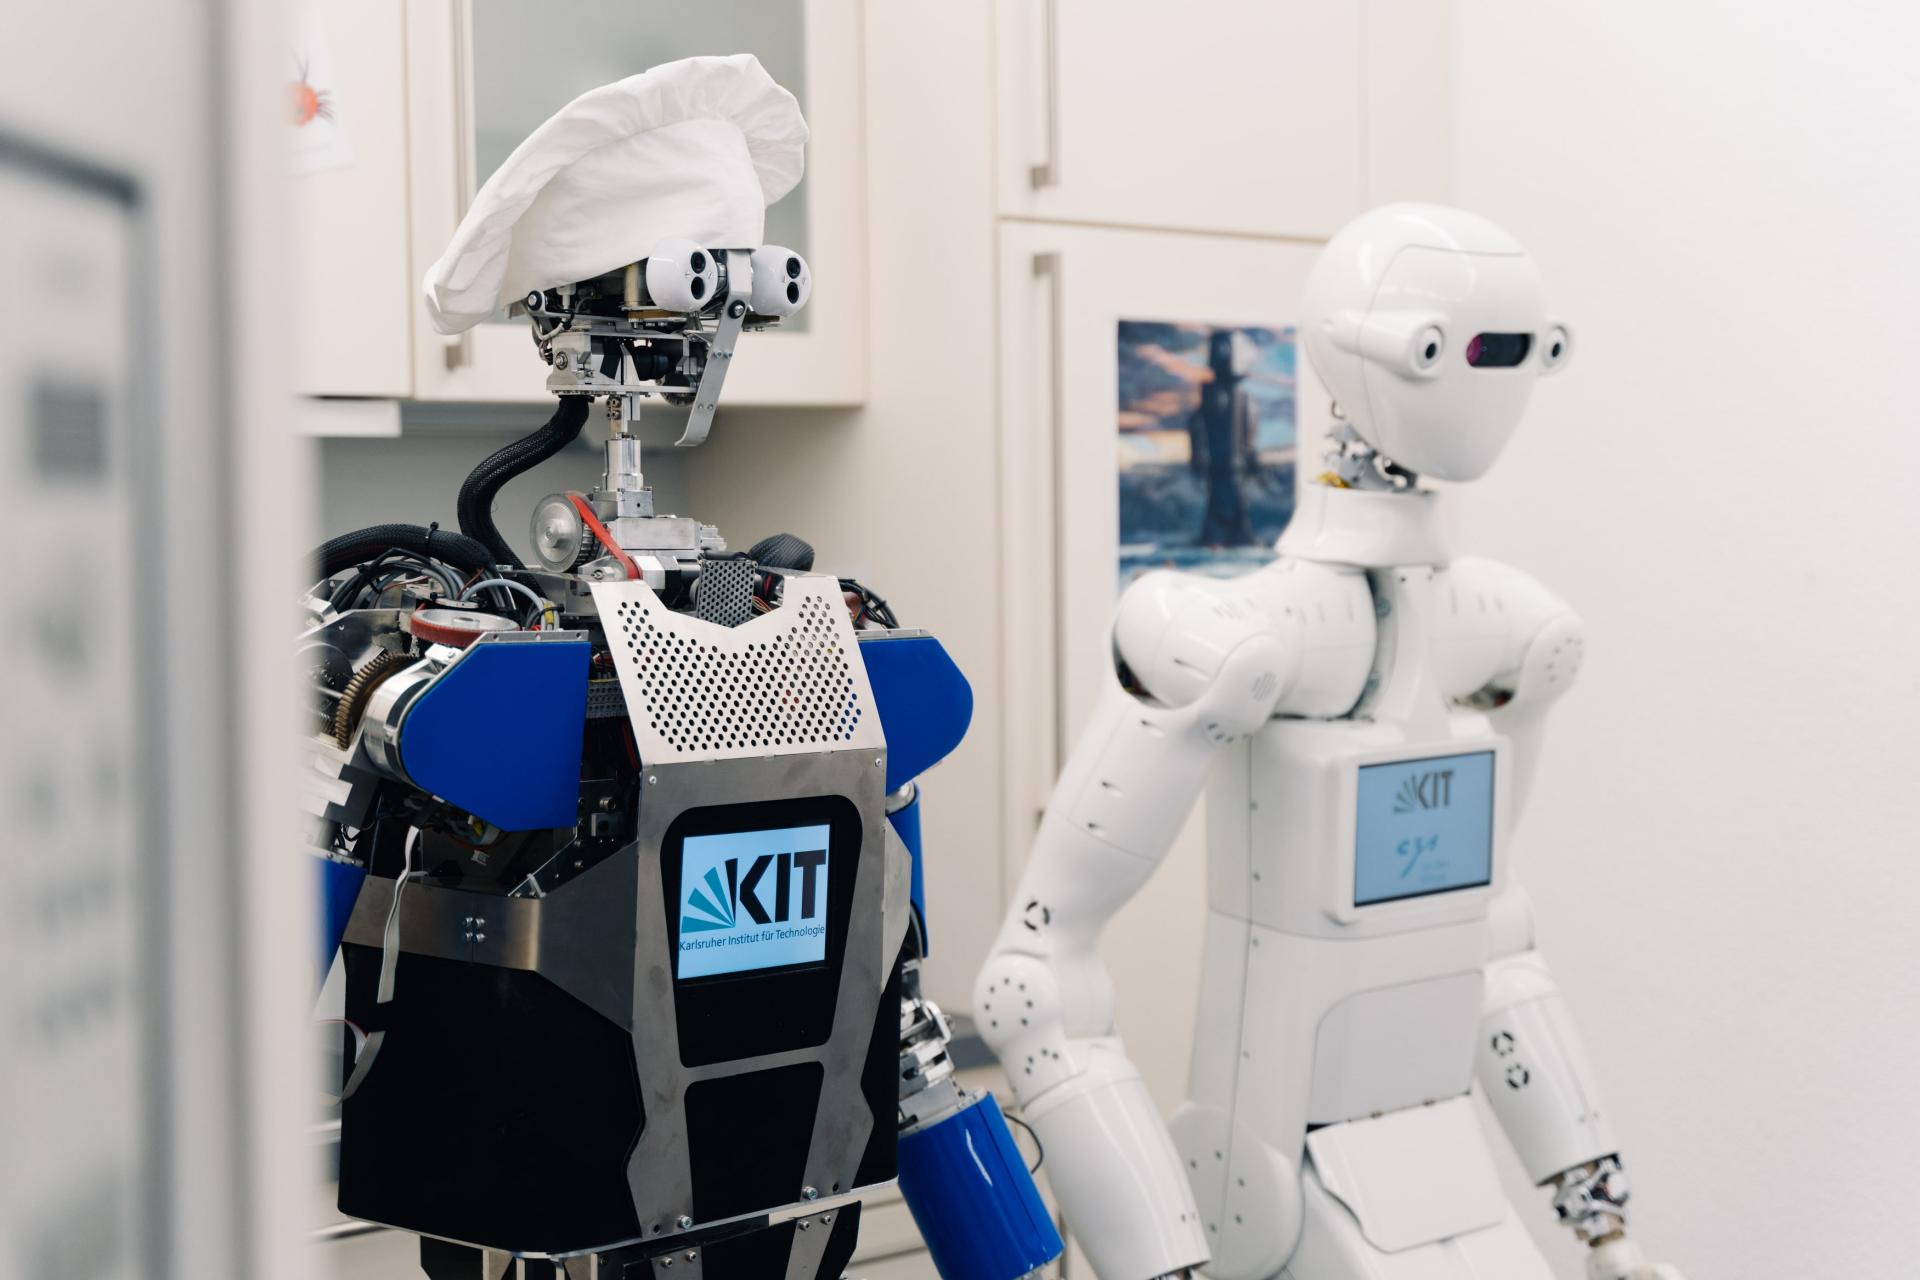 Robots for elderly care